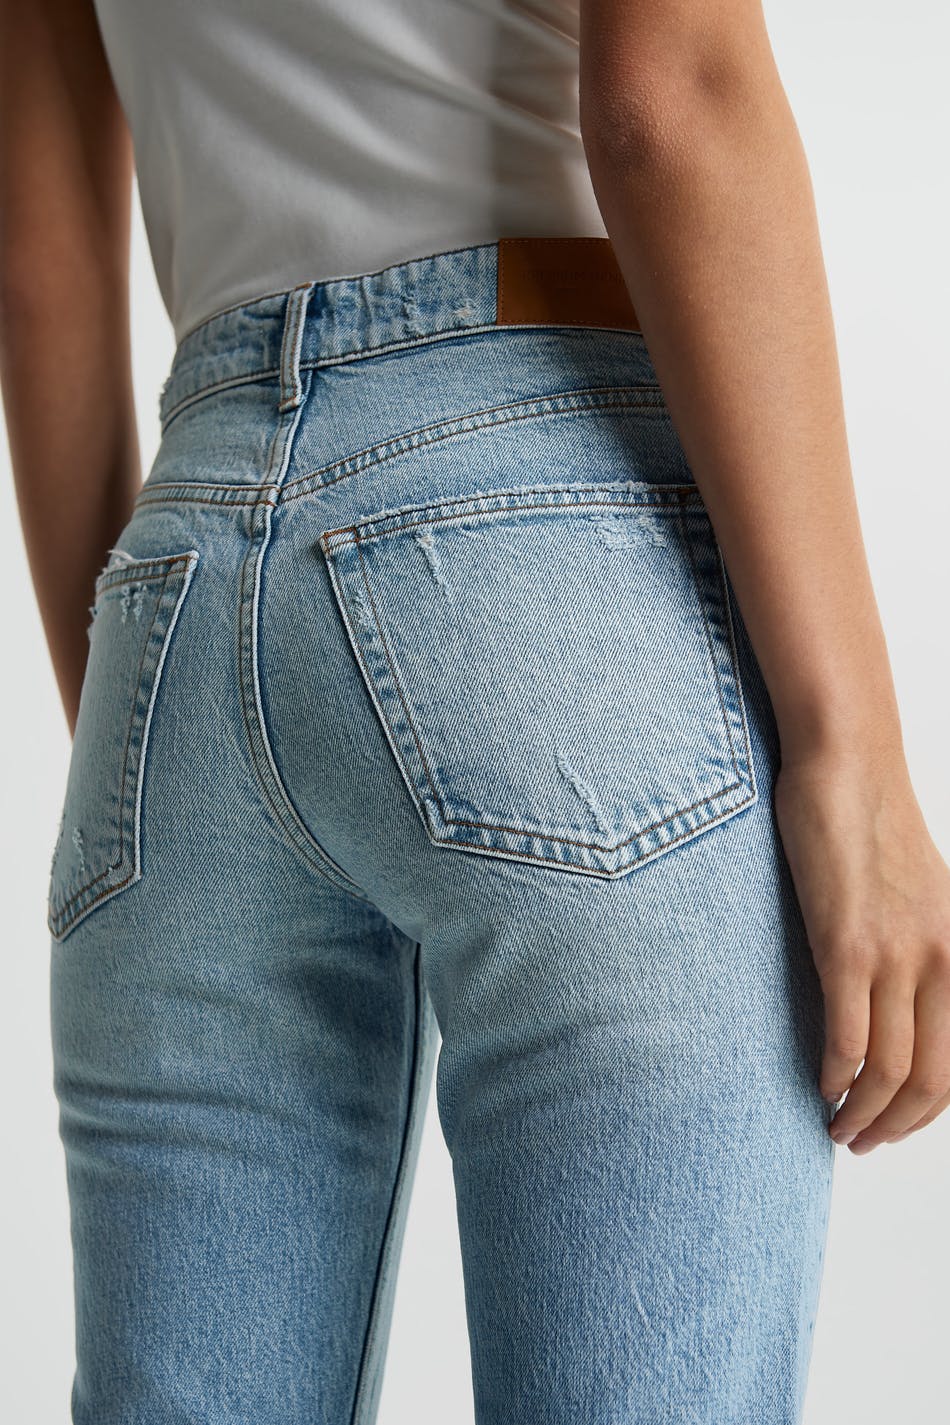 Viva At accelerere Calibre Tove original slim jeans - Blue - Women - Gina Tricot